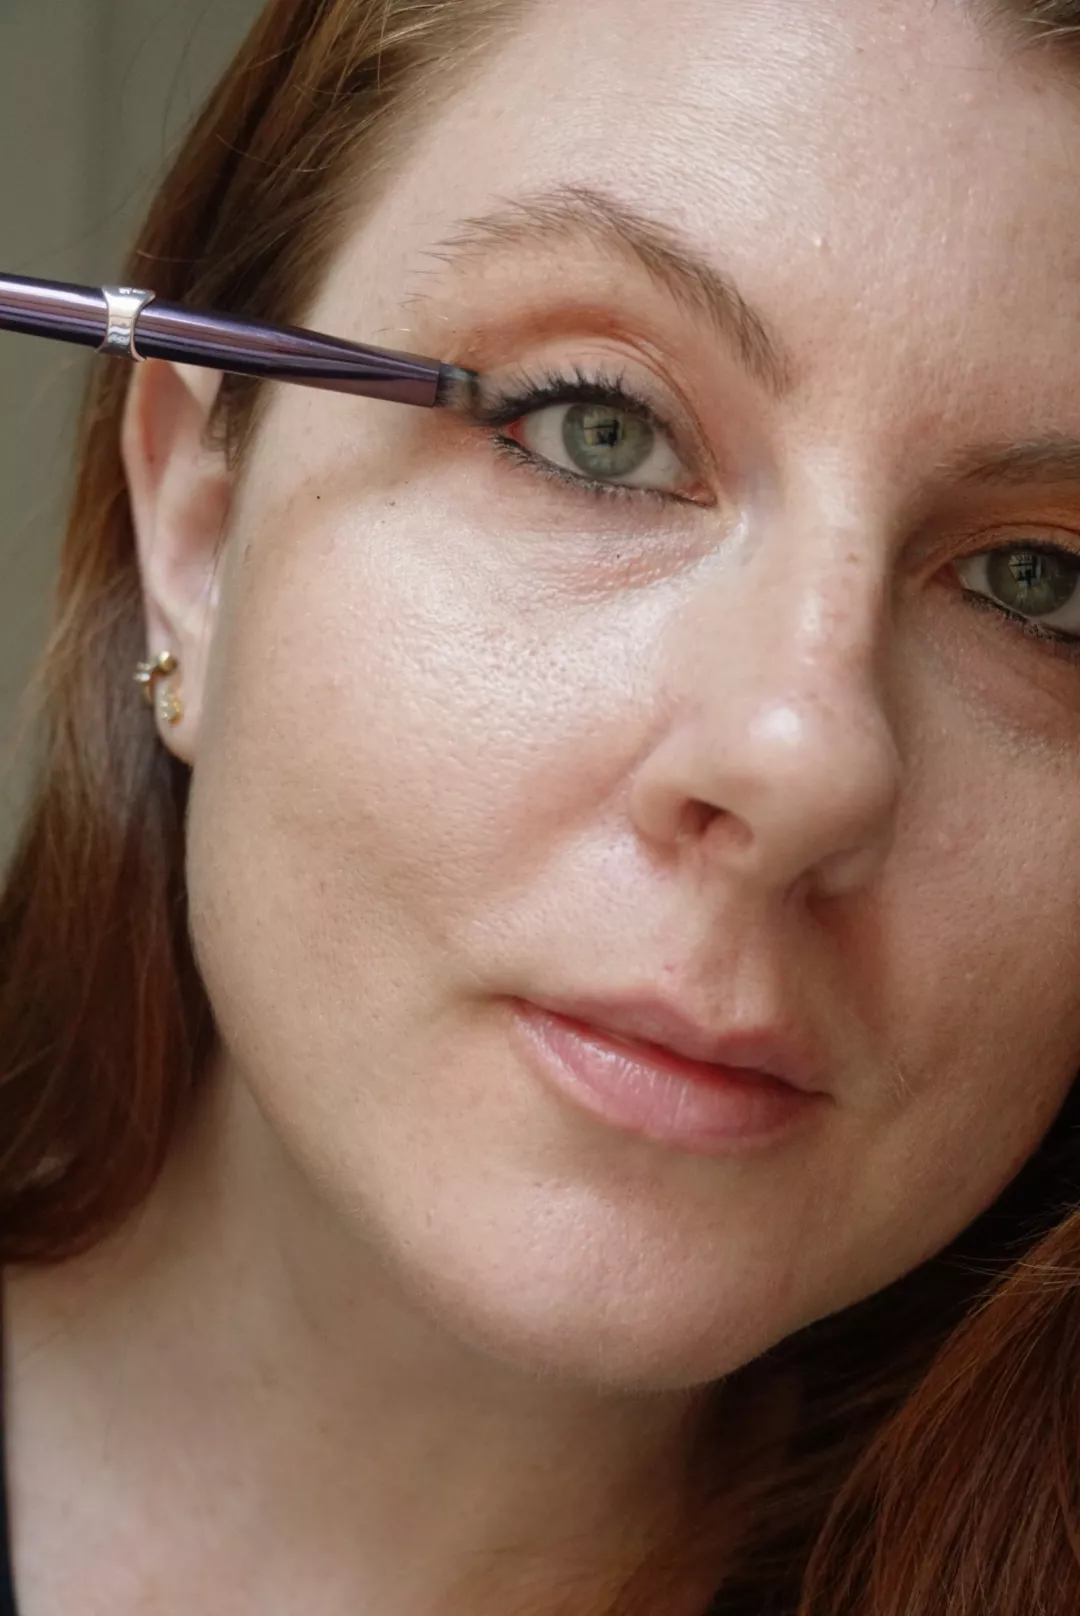 Makeup artist and Byrdie writer Ashley Rebecca blending eyeliner with eye makeup brush